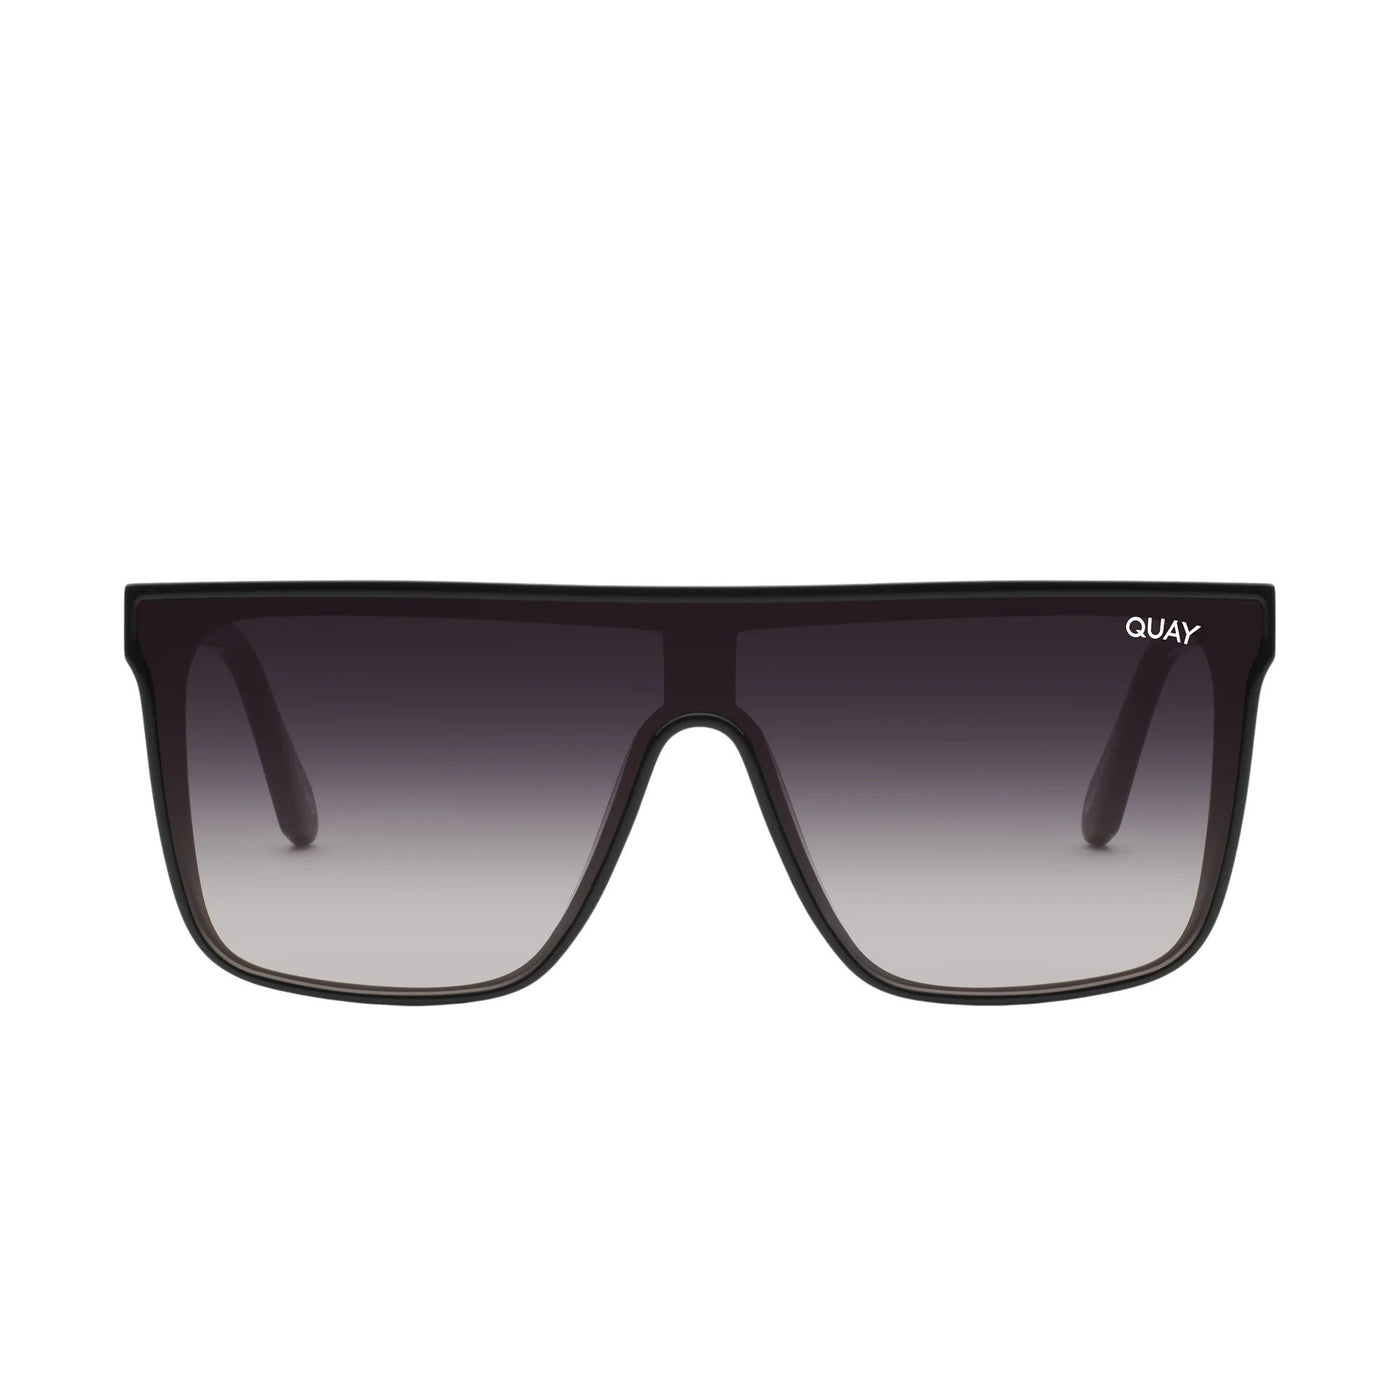 Quay Women's Nightfall Flat Top Shield Sunglasses - Black Frame/Black Fade Polarized Lens  - front